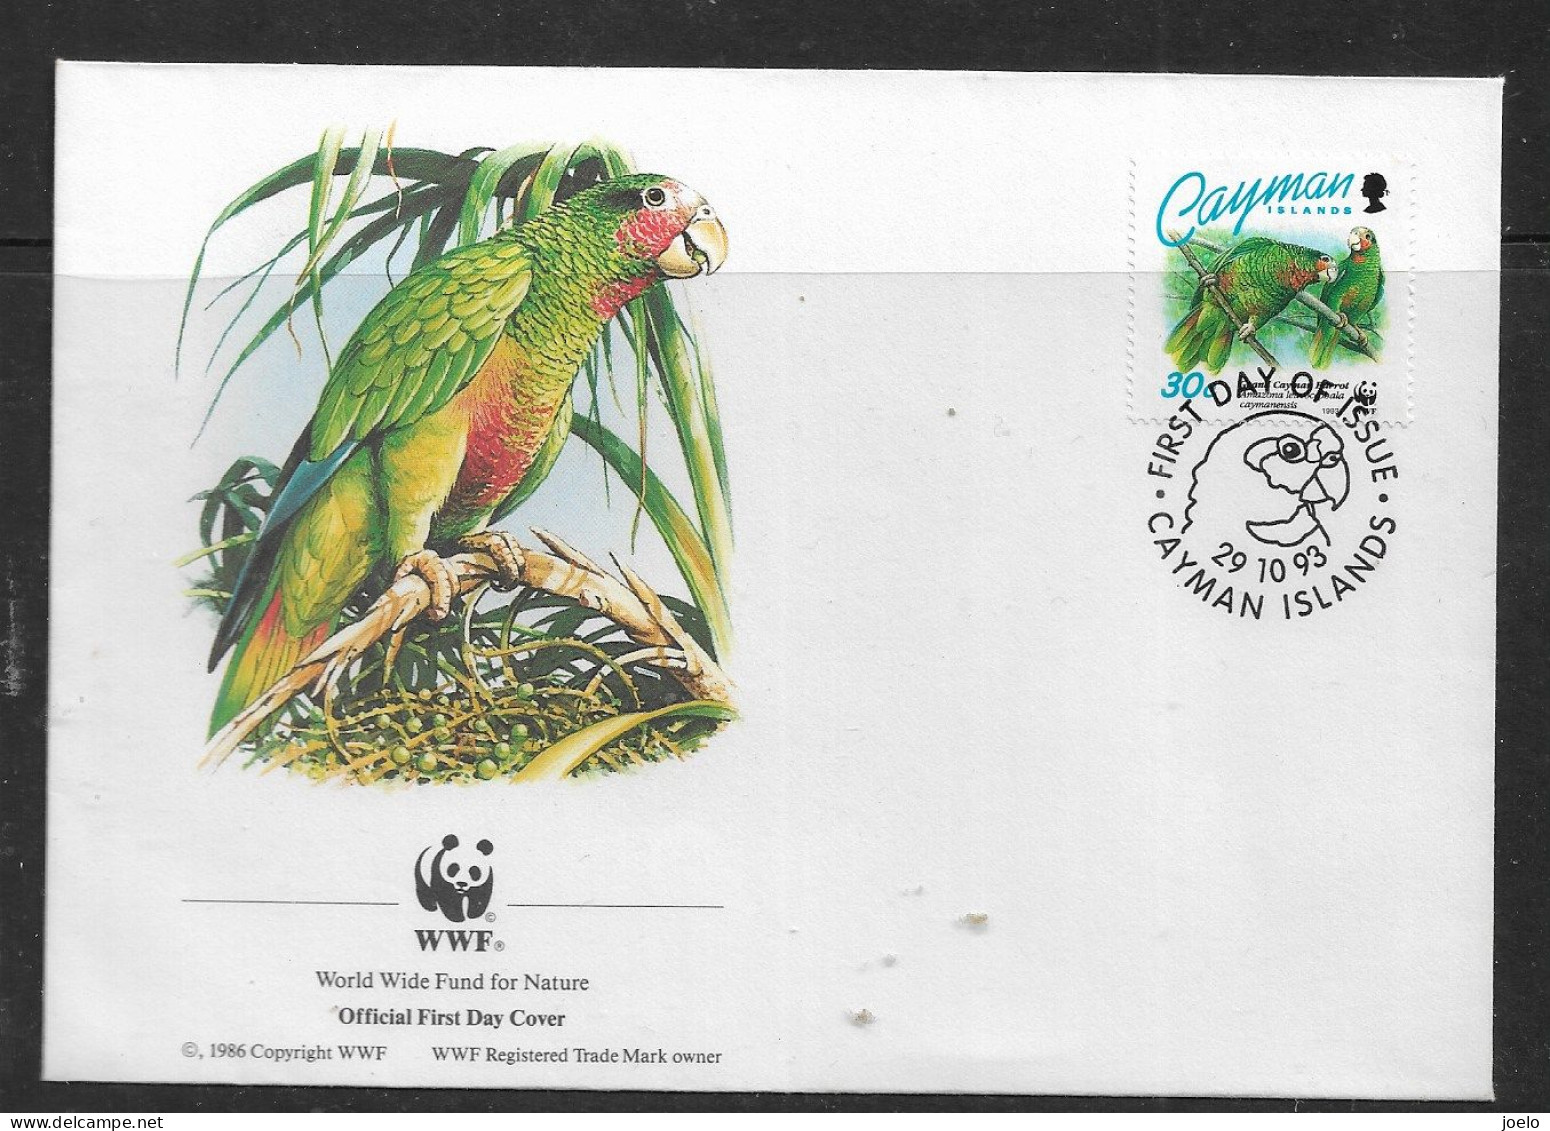 CAYMAN ISLAND 1993 PARROTS WWF FDC - Caimán (Islas)